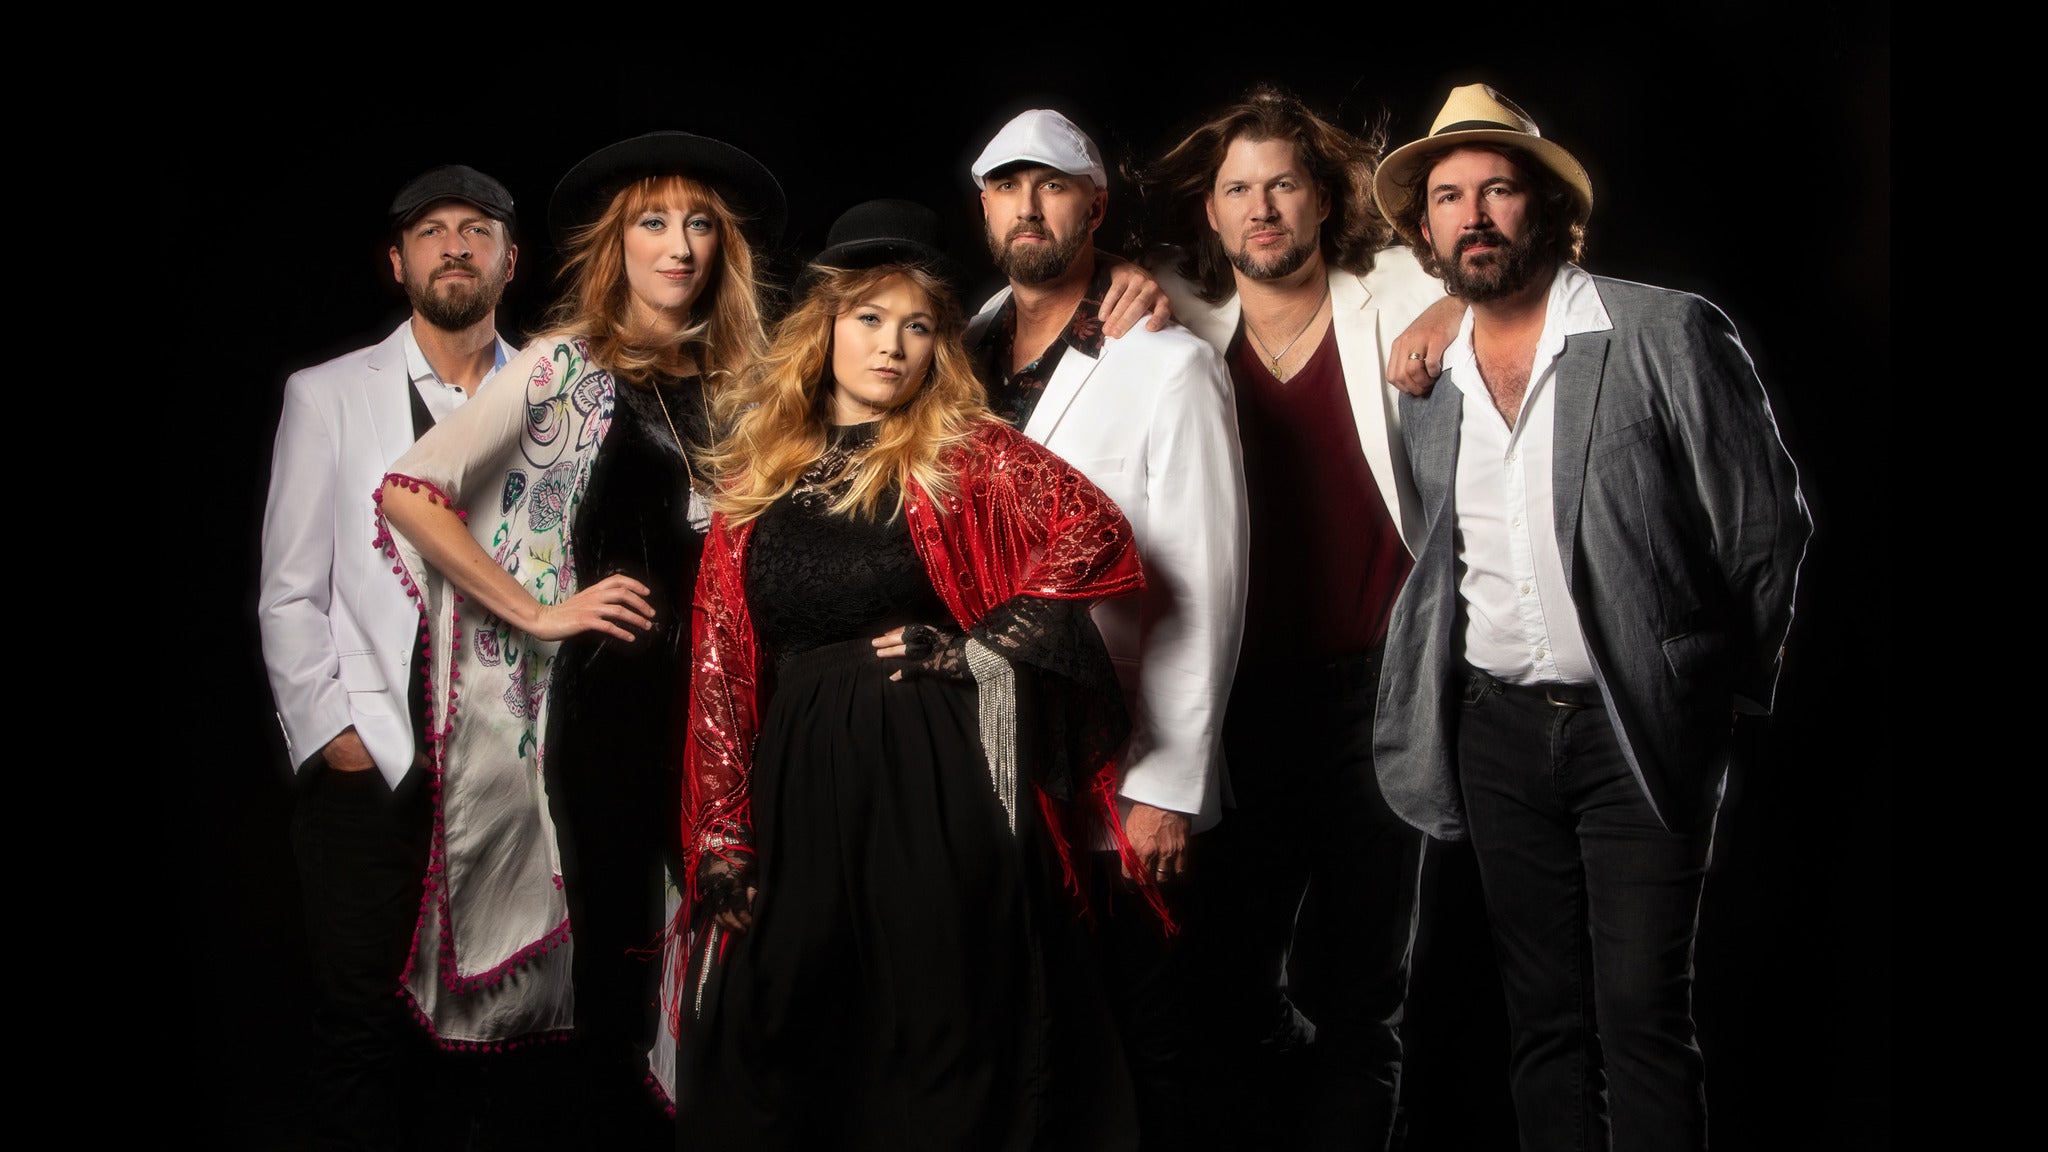 Rumours - A Fleetwood Mac Tribute in Dallas promo photo for Citi® Cardmember presale offer code